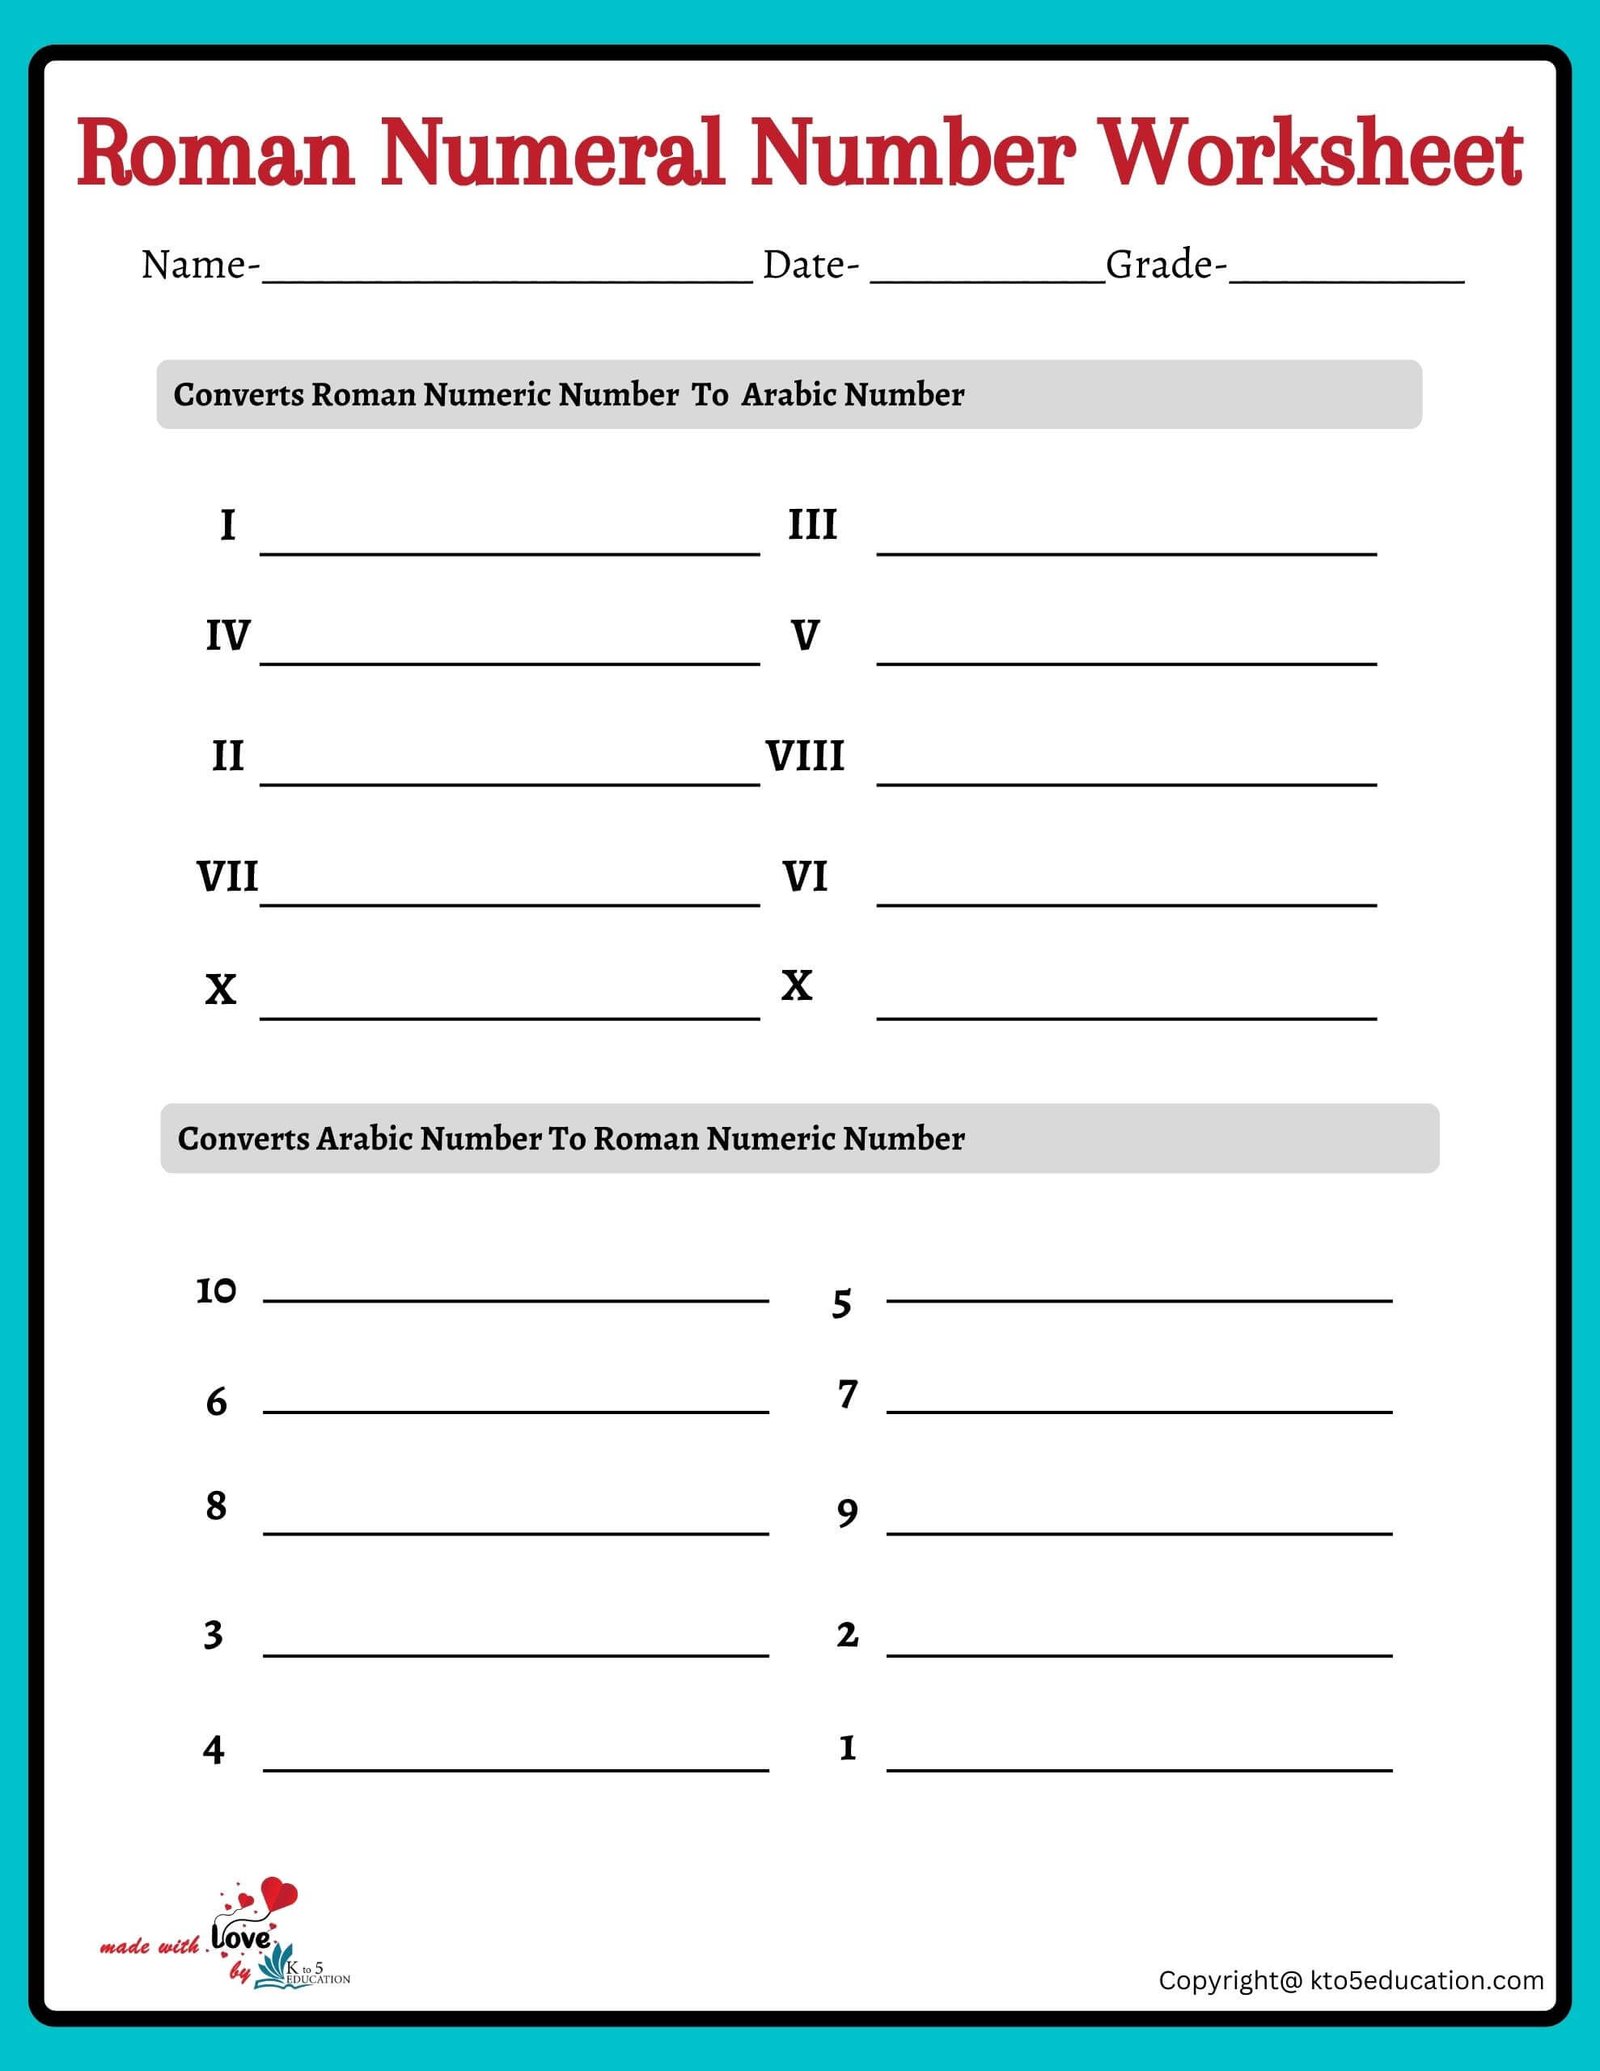 Roman Numeral Worksheets Grade 5